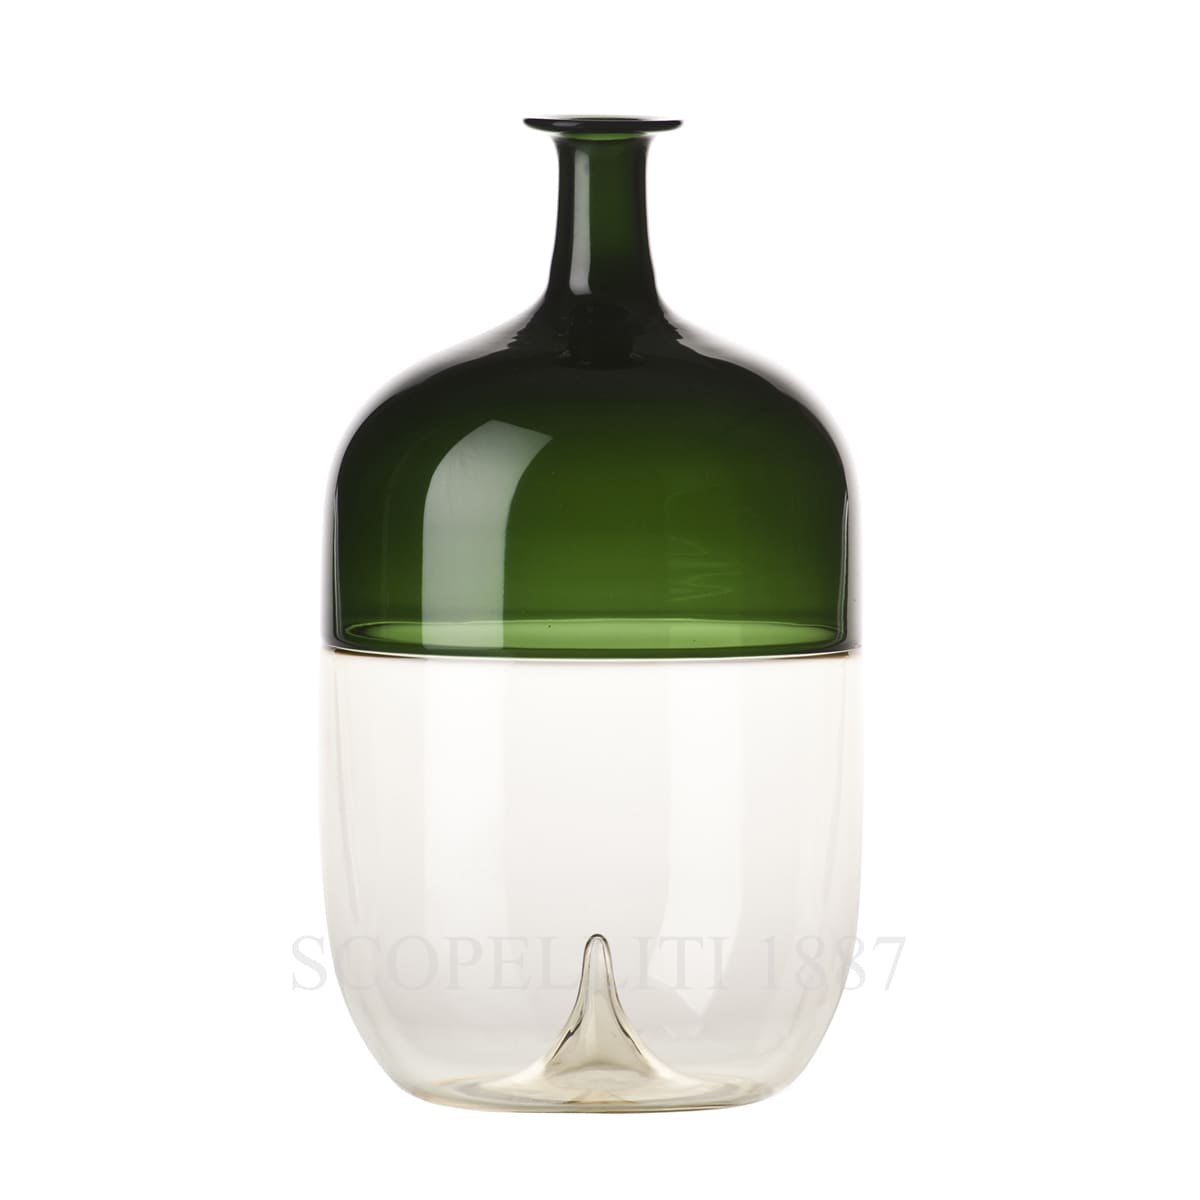 venini bolle murano glass italian design bottle straw yellow grass green